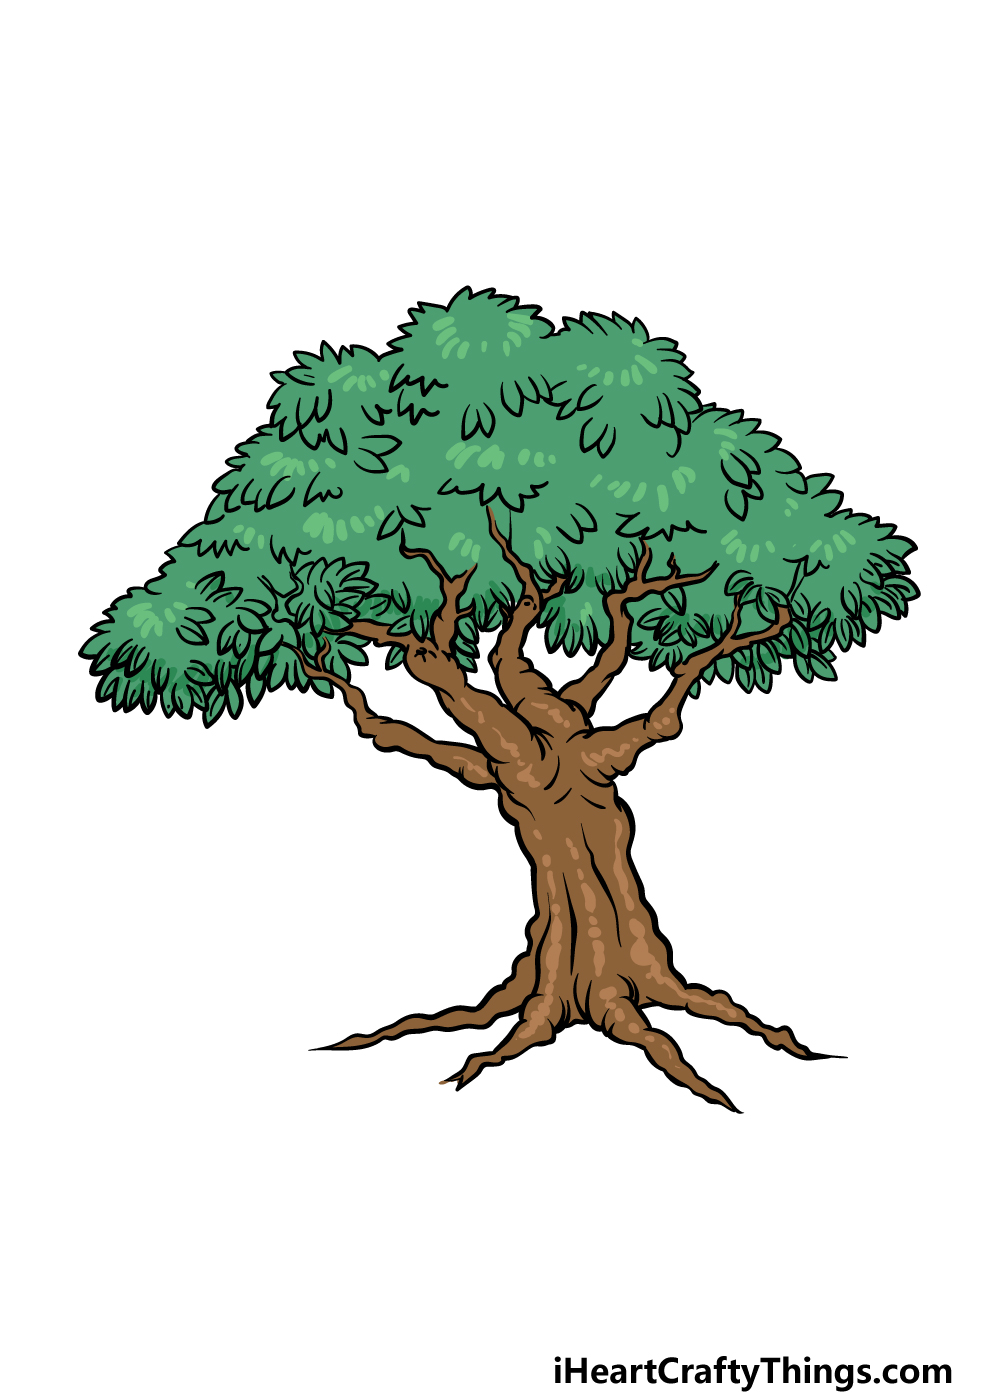 Cartoon Tree Drawing - How To Draw A Cartoon Tree Step By Step